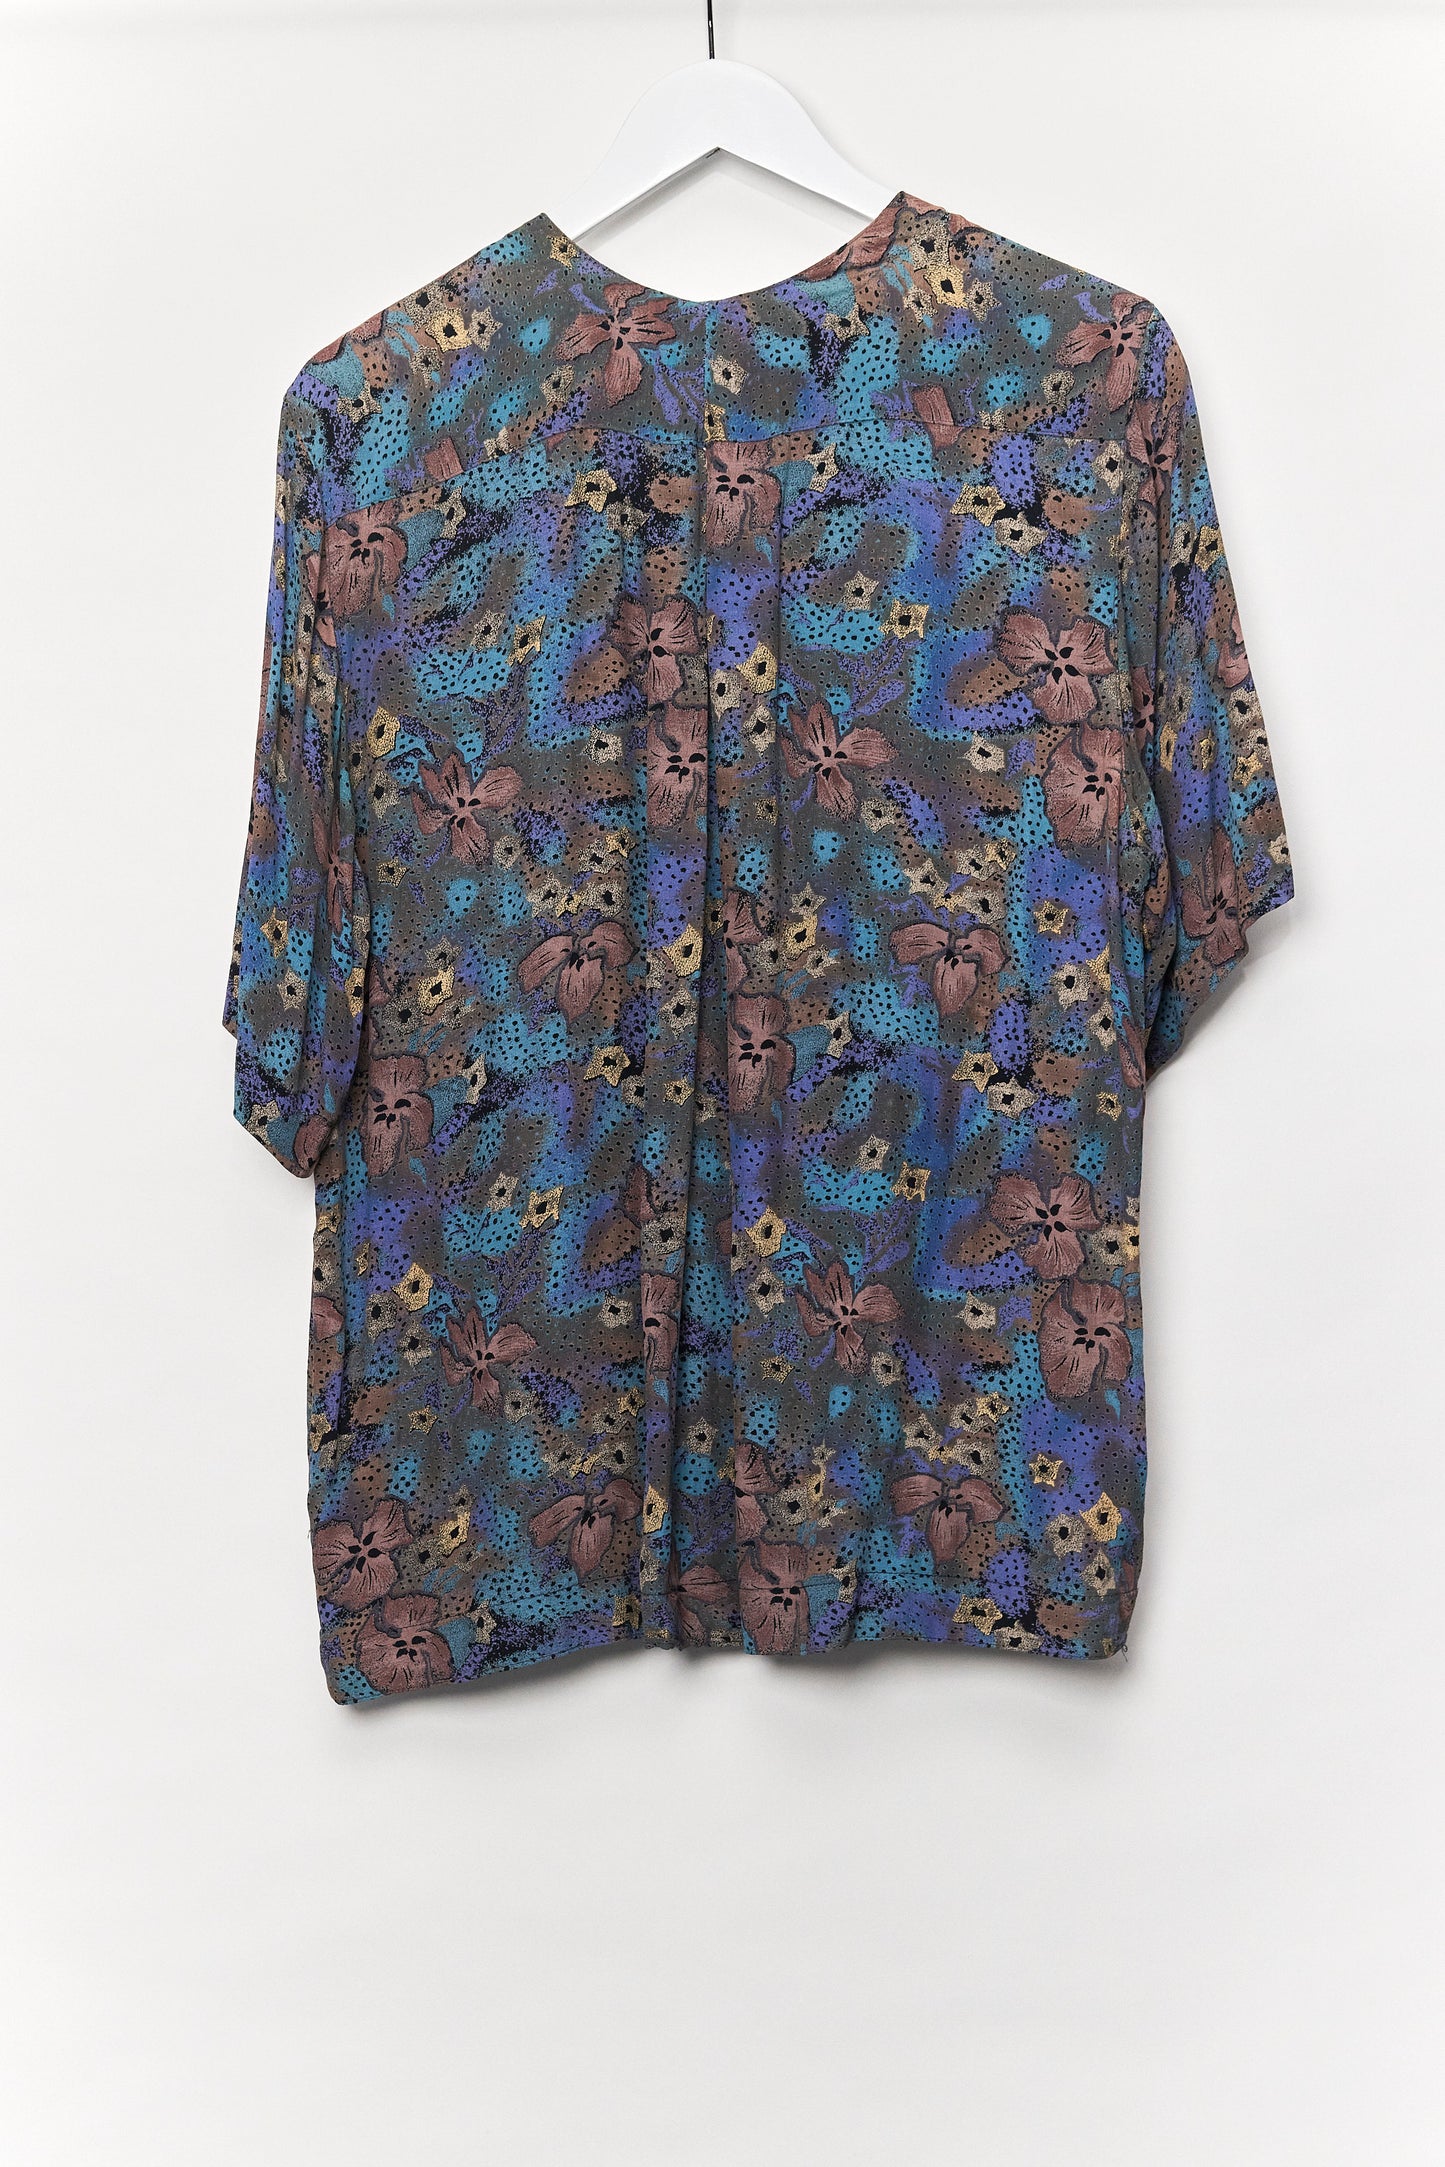 Unisex Blue Pattern collarless shirt size large